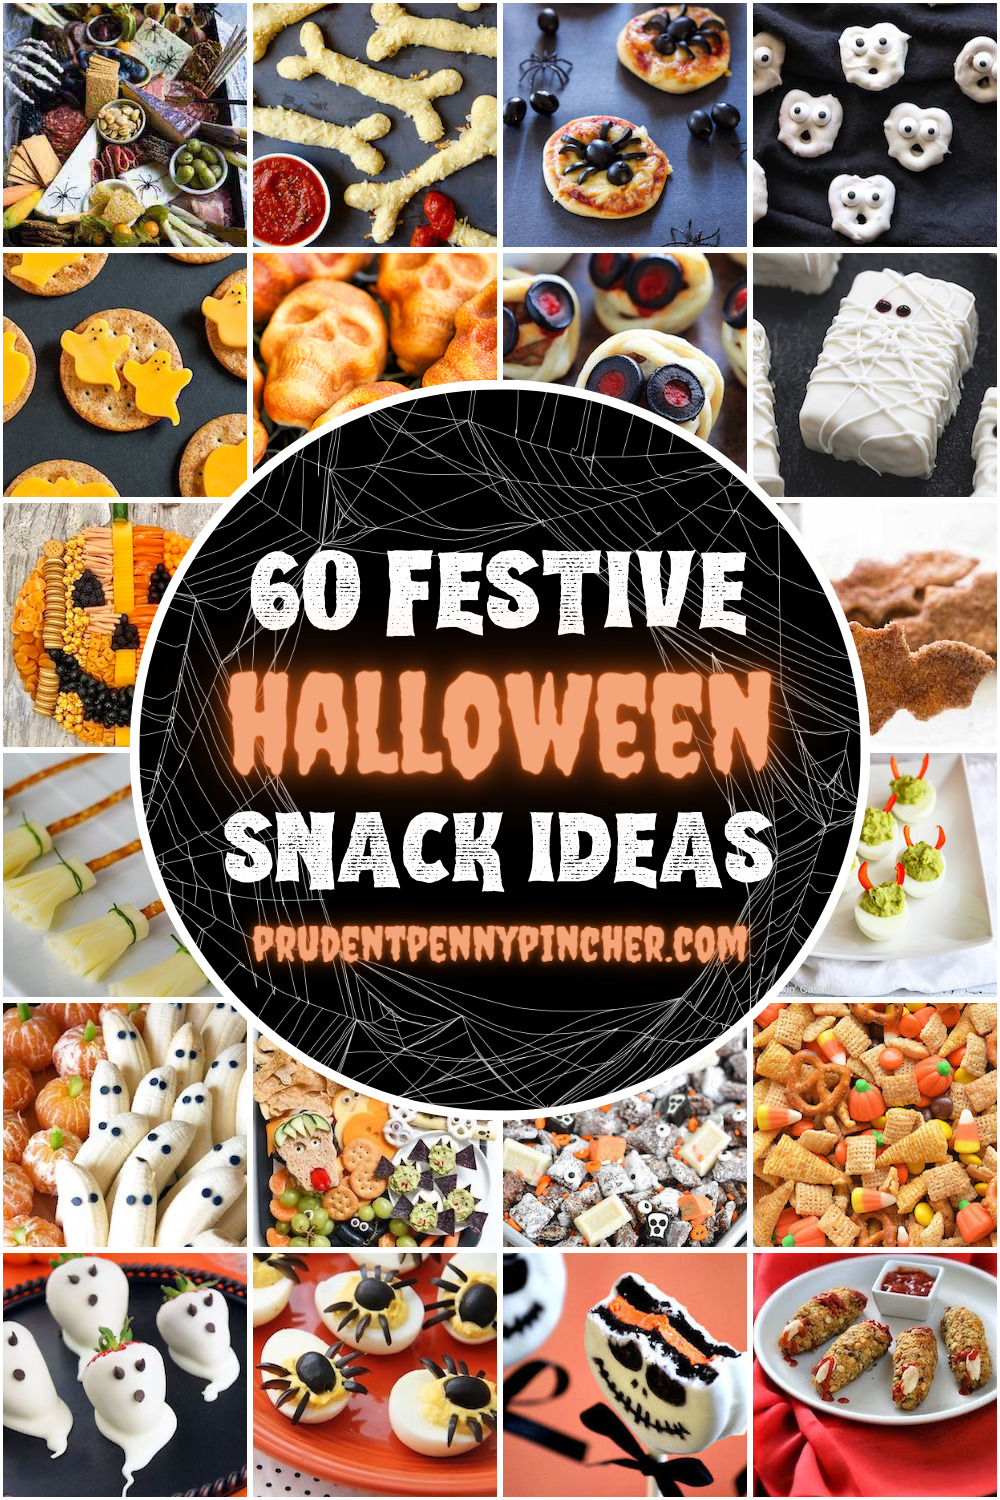 5 Spooky Cute Halloween Treats - The BakerMama